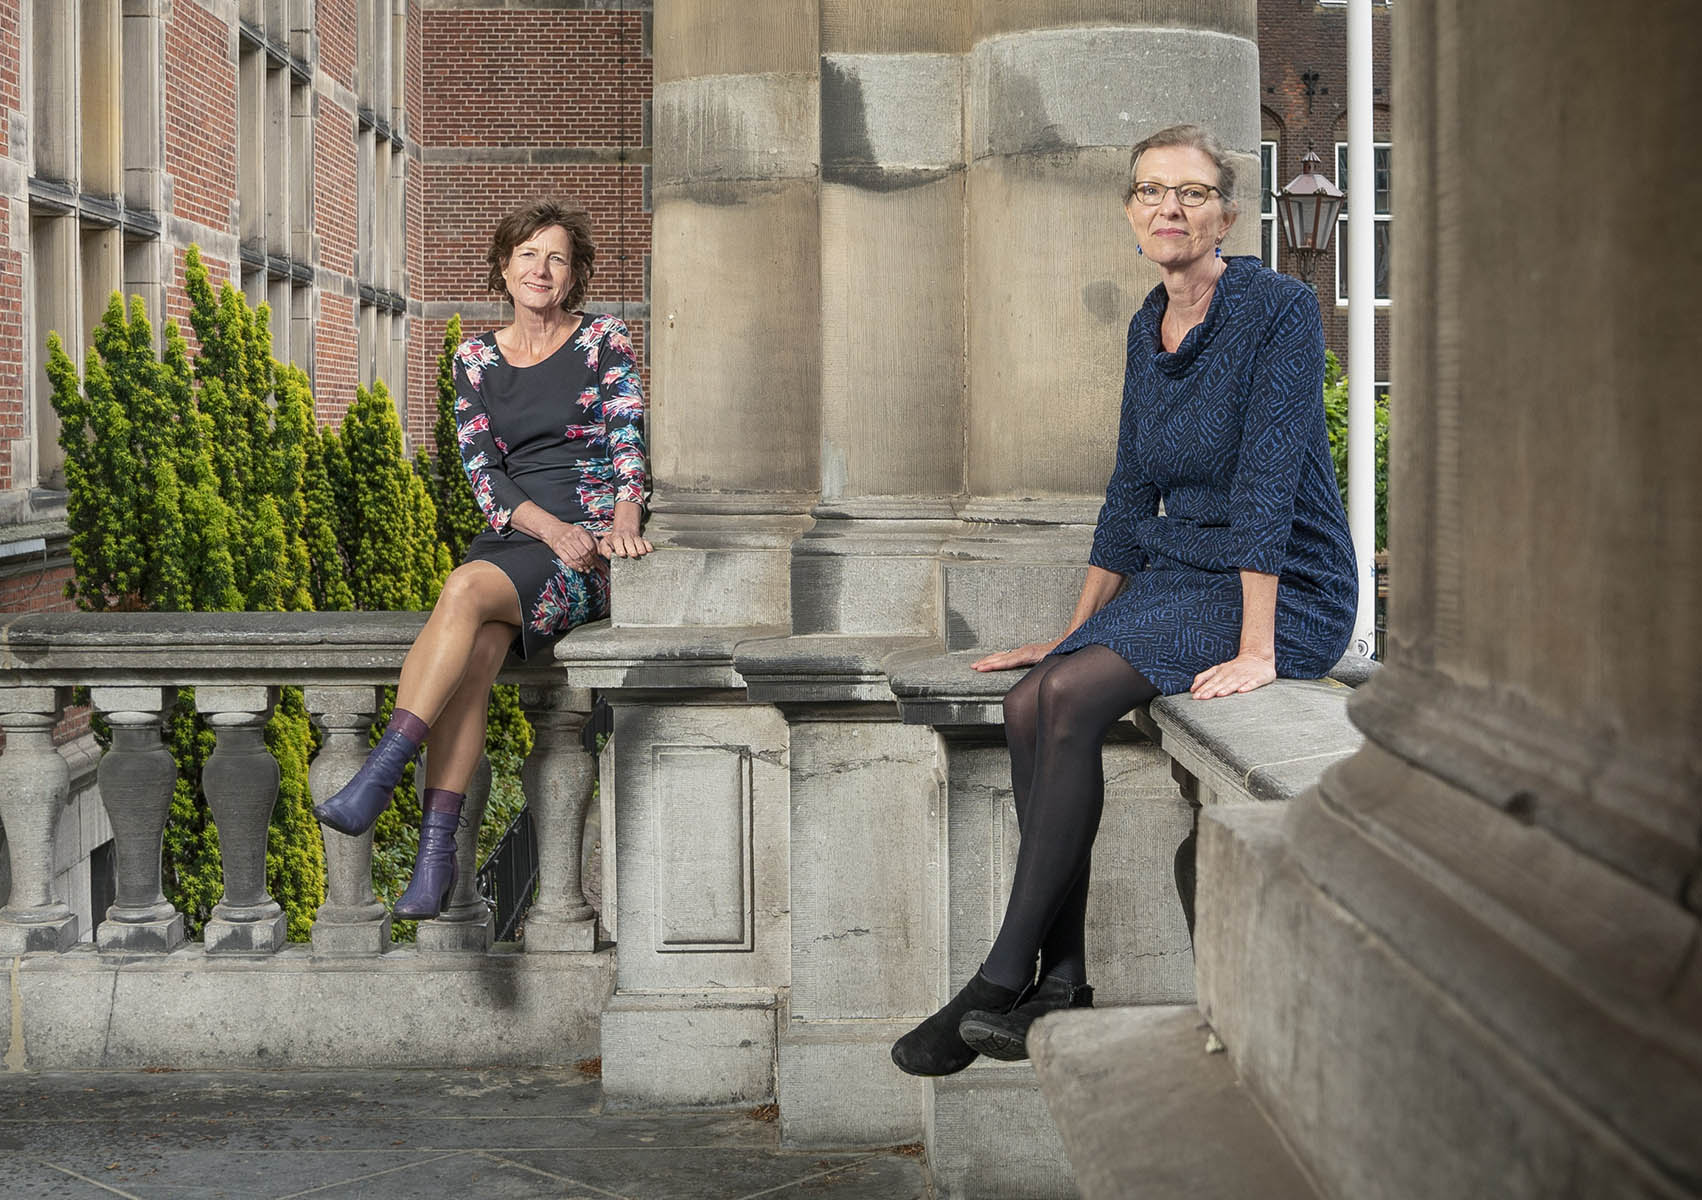 Linda Steg and Pauline Kleingeld (photo: Reyer Boxem)